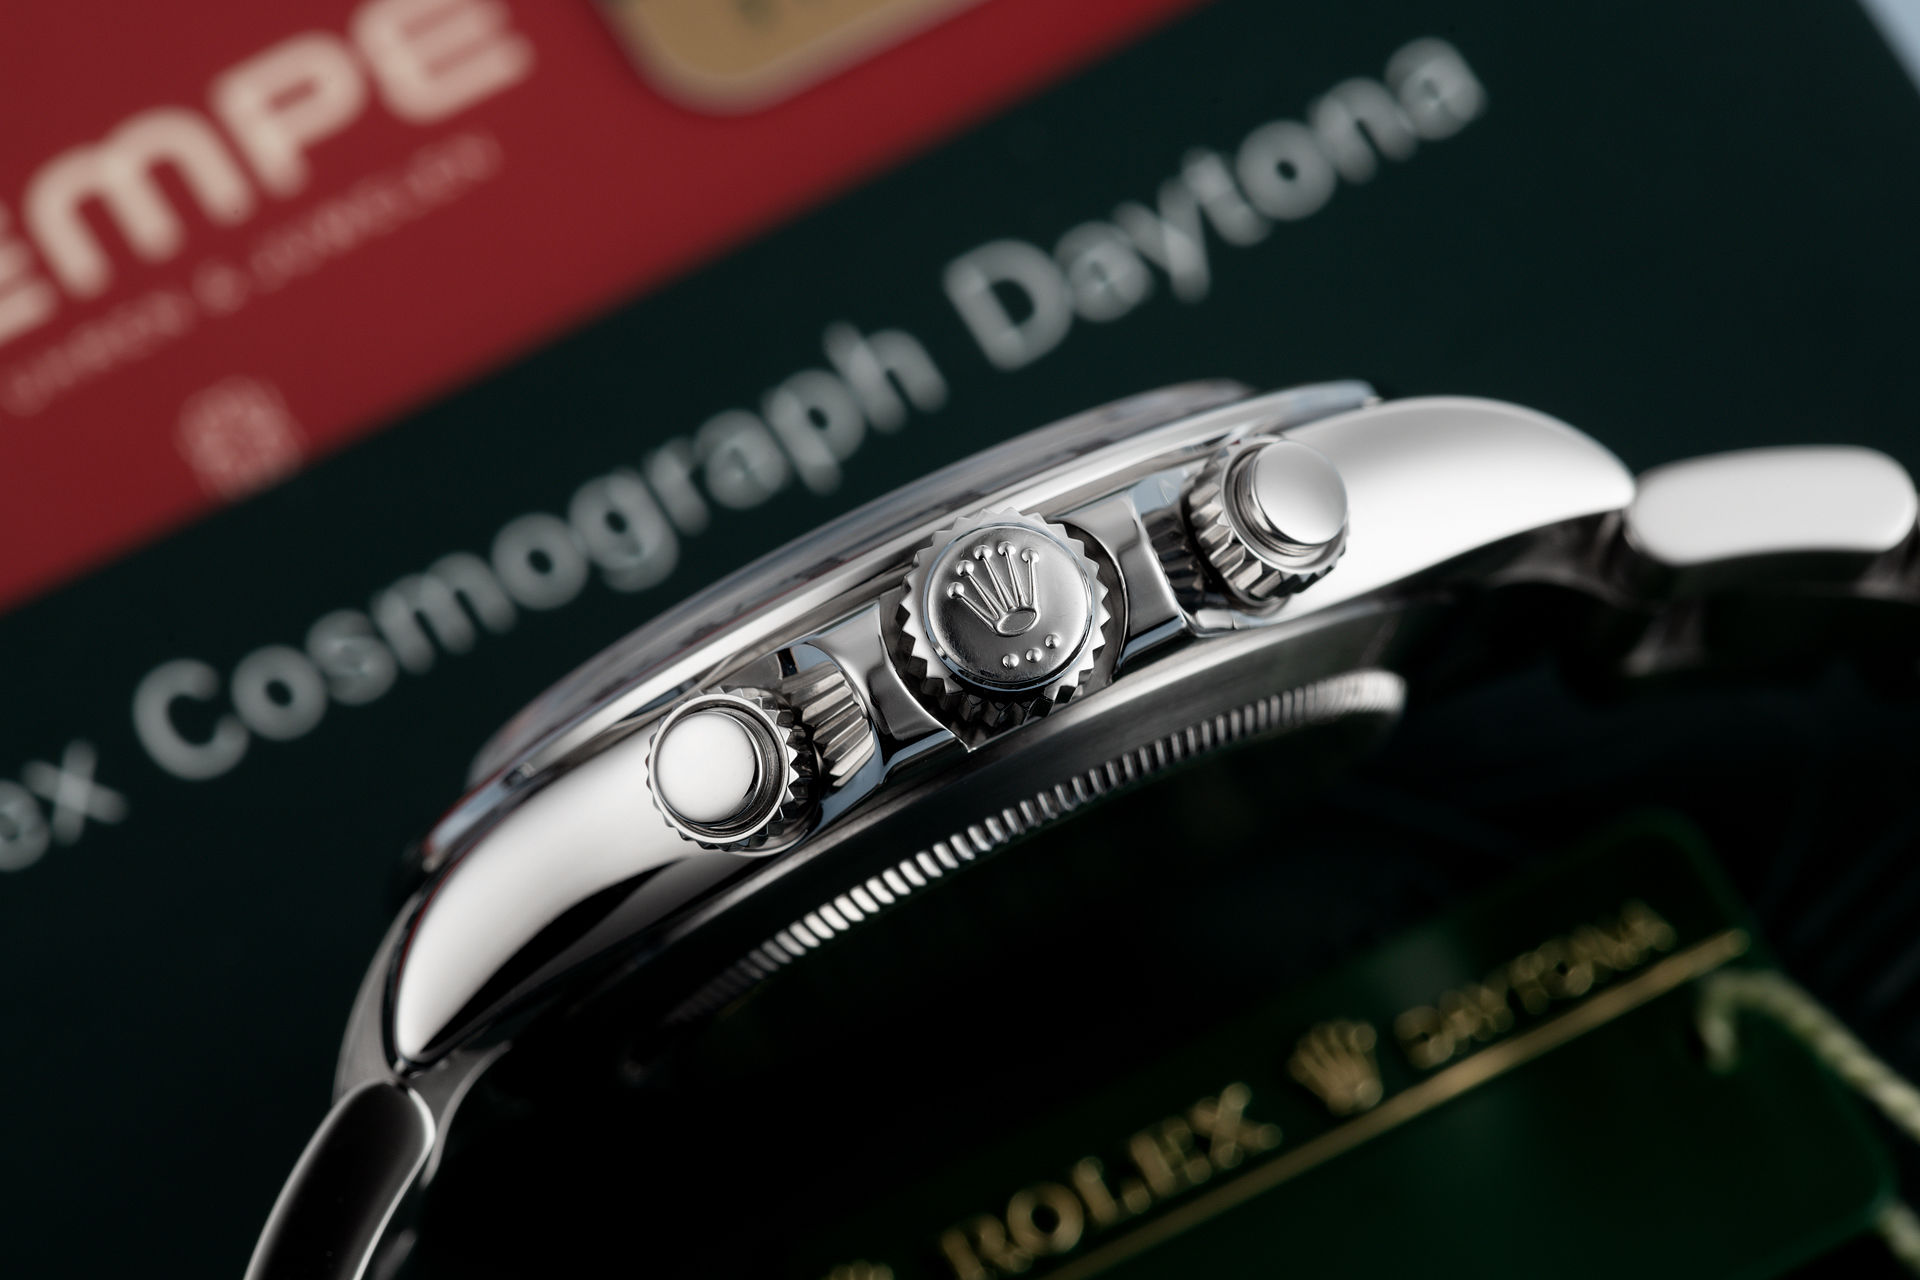 ref 116520 | Pre-Chromalight 'Full Set' | Rolex Cosmograph Daytona